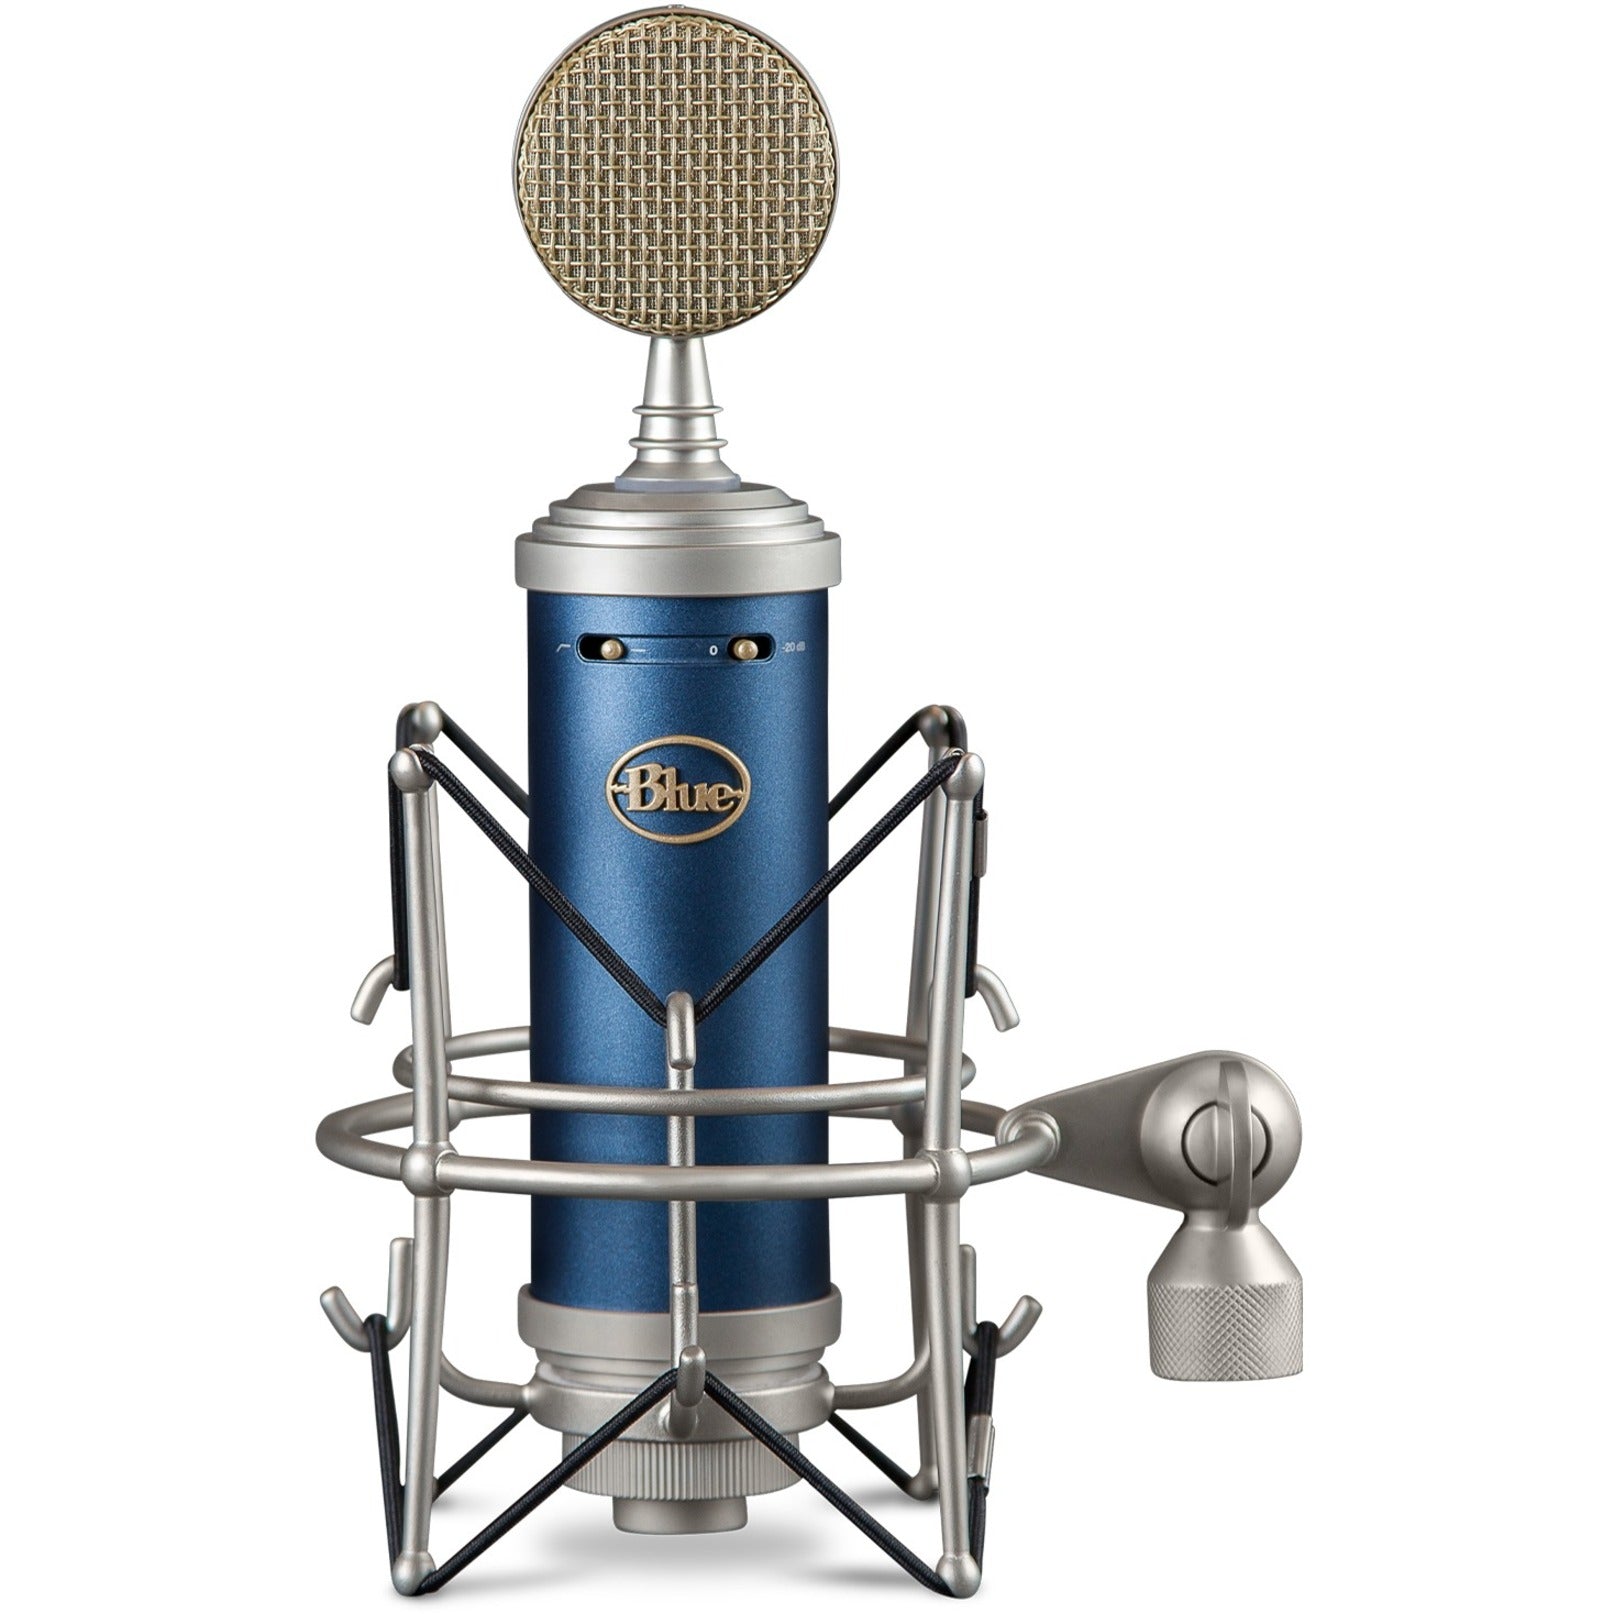 Logitech 988-000004 Bluebird SL Microphone, USB Wired, Cardioid Polar Pattern, Condenser Technology